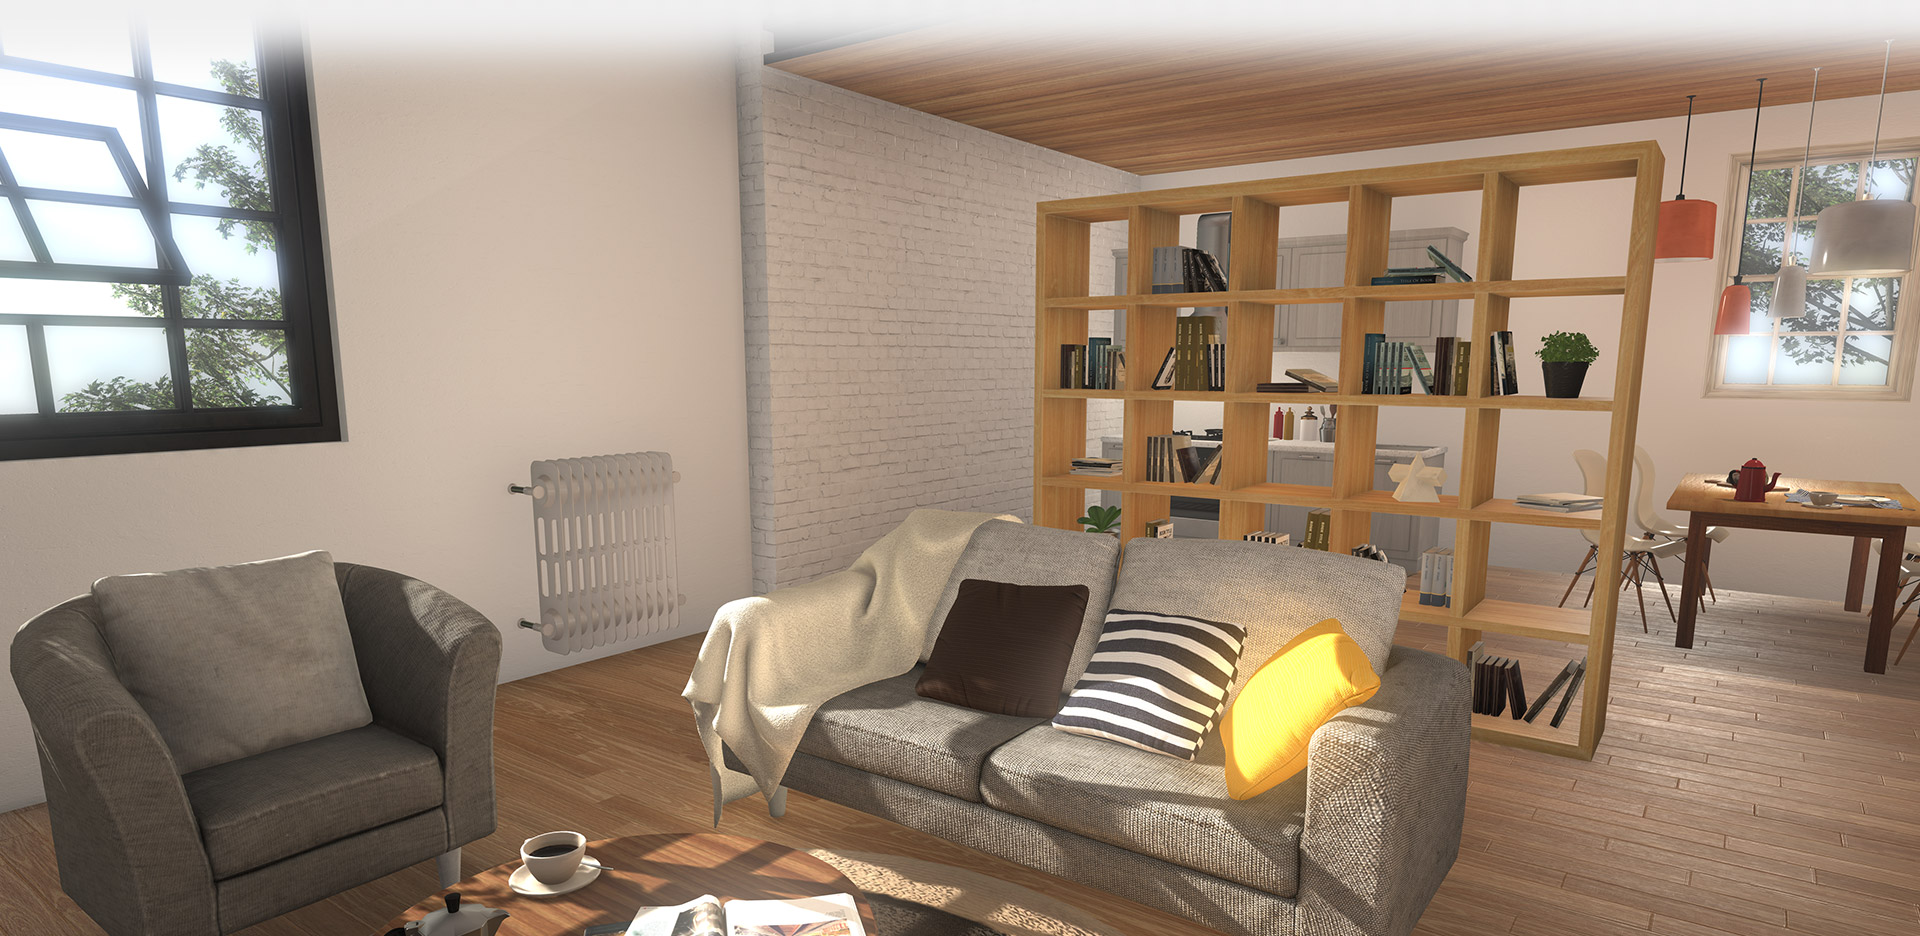 interior 3d scene - living room